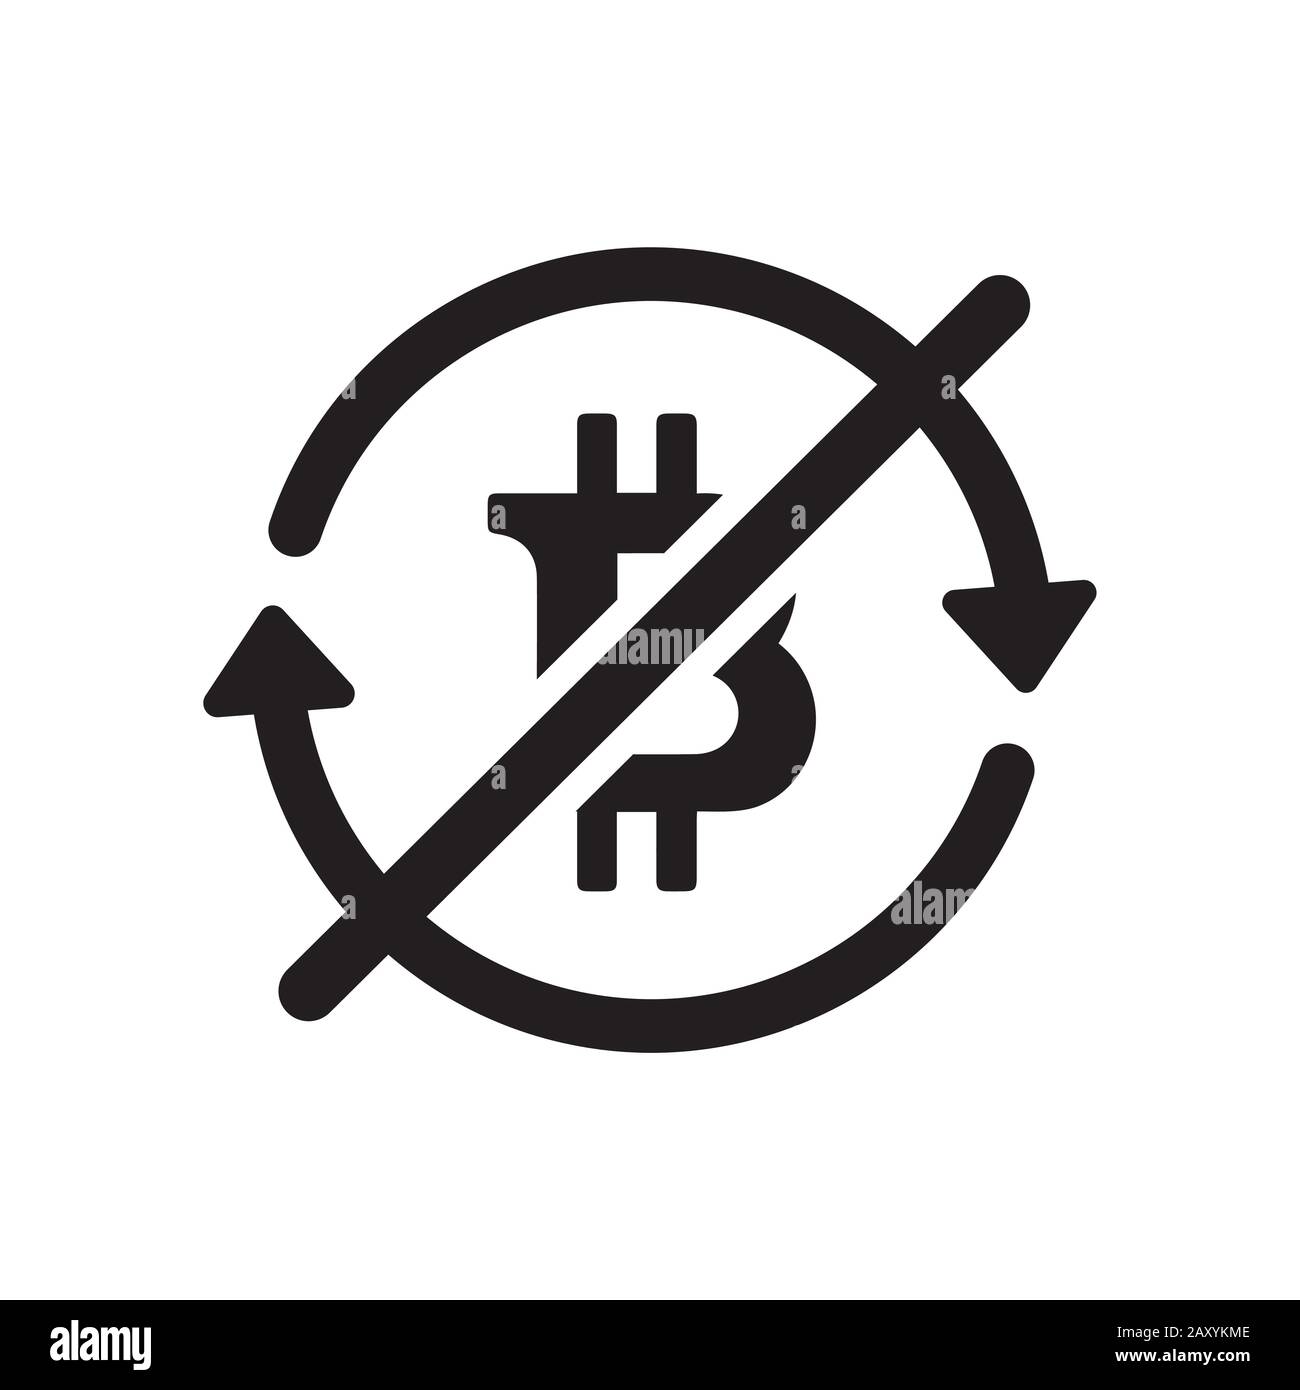 Bitcoin-Vektor-Symbolabbildung / kein Austausch Stock Vektor